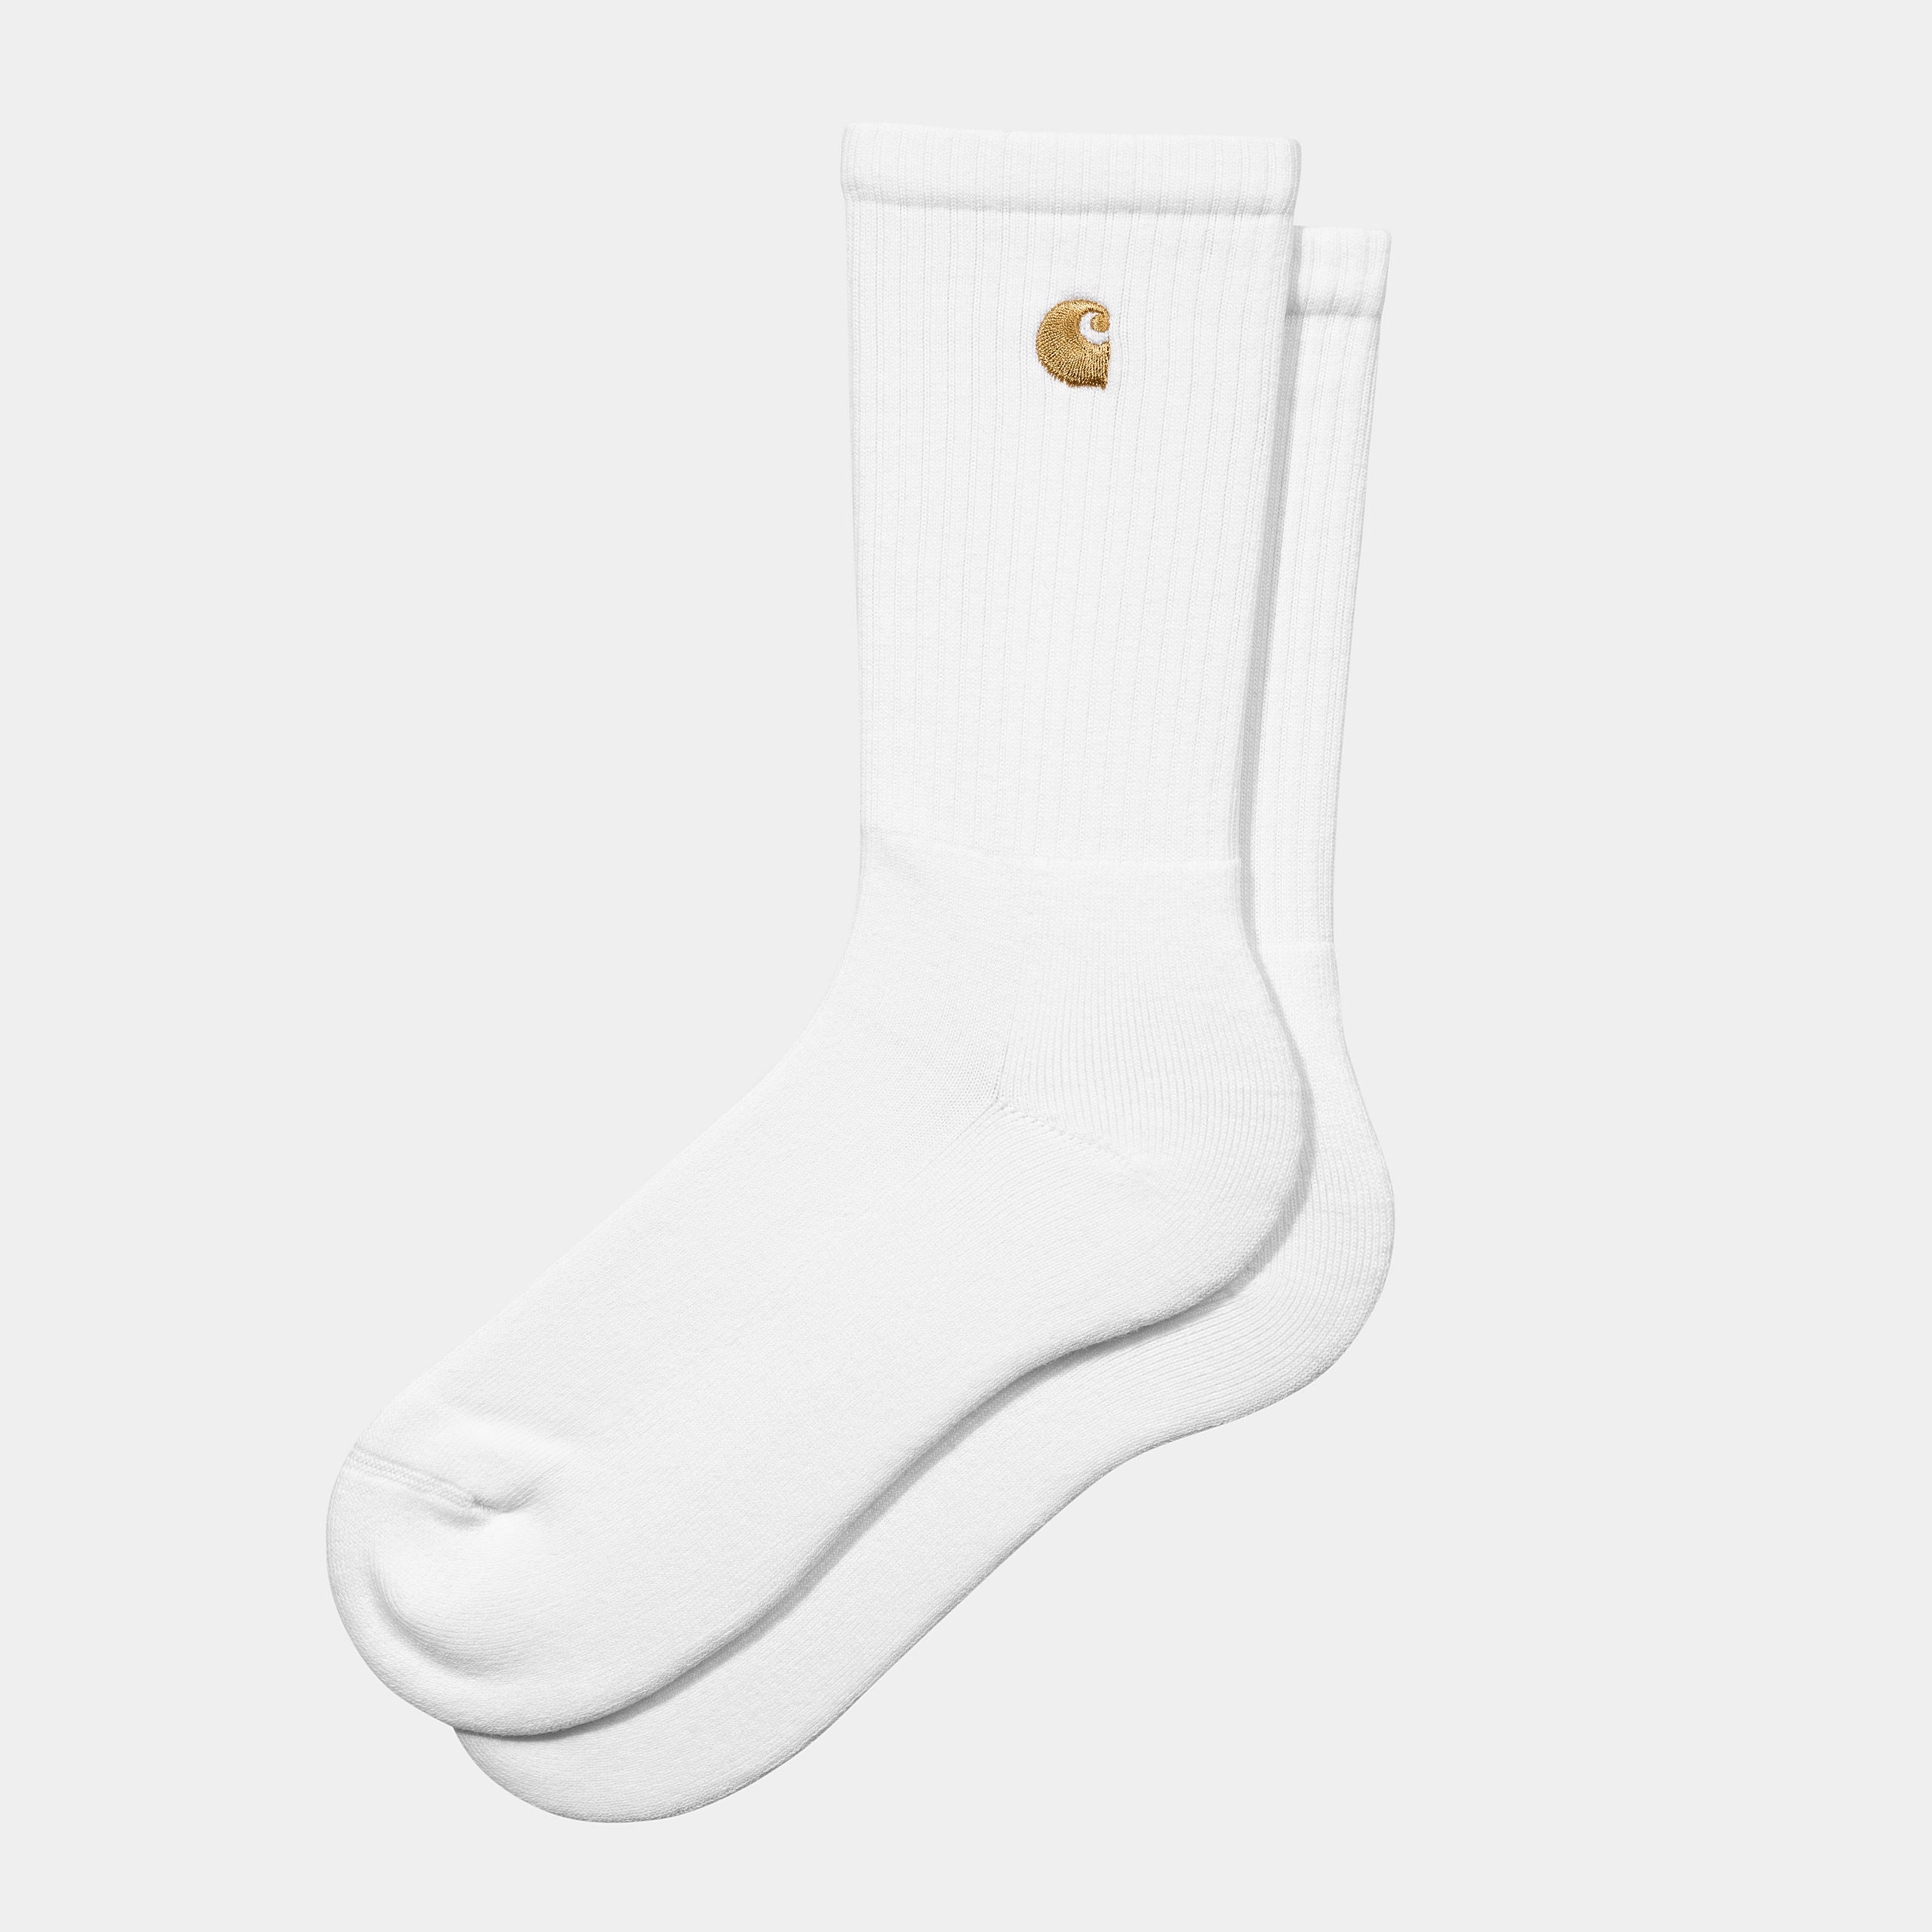 chase-socks-6-minimum-white-gold-827_png.jpg